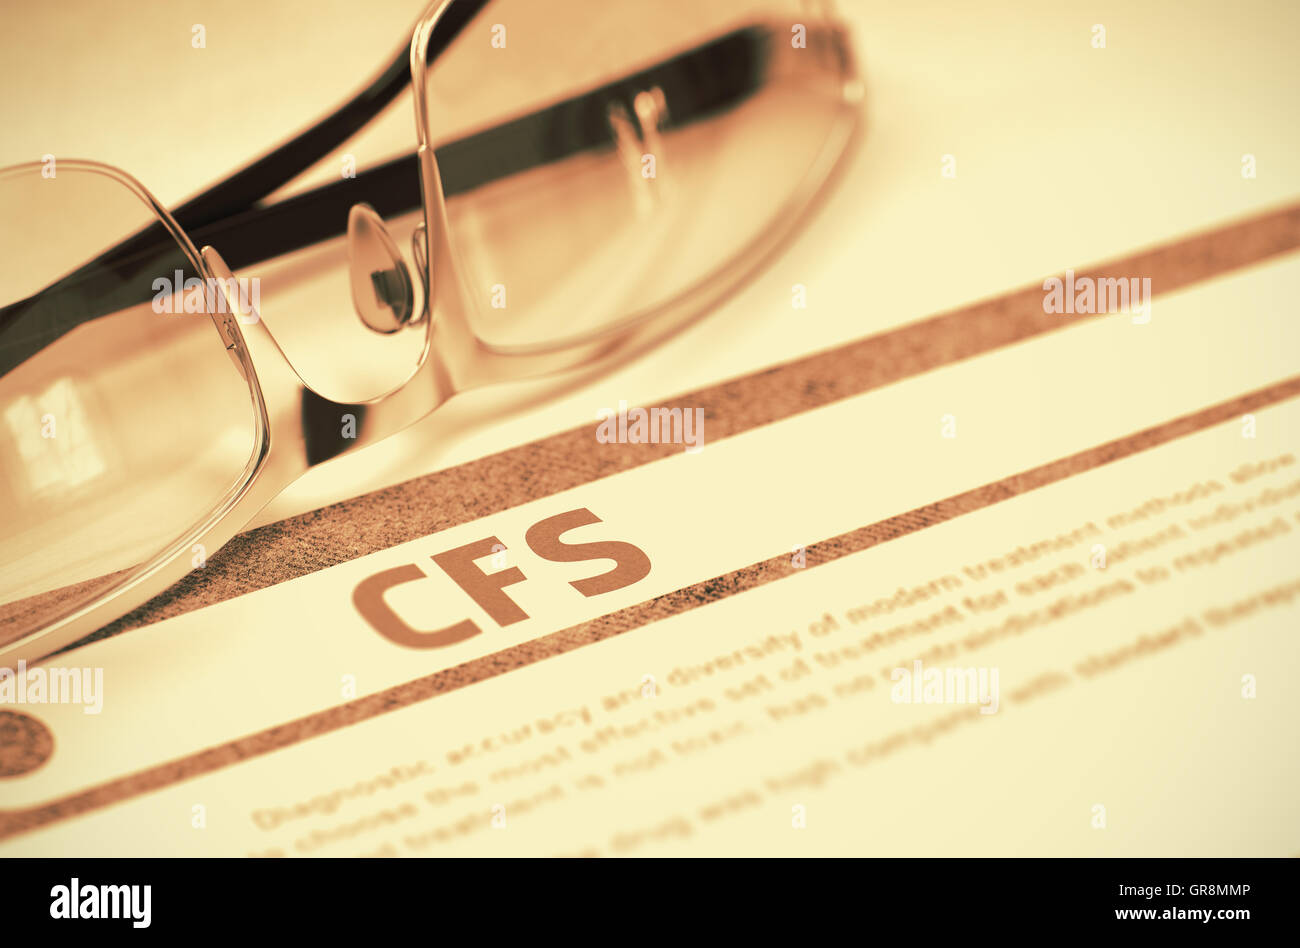 CFS - Printed Diagnosis. Medicine Concept. 3D Illustration. Stock Photo